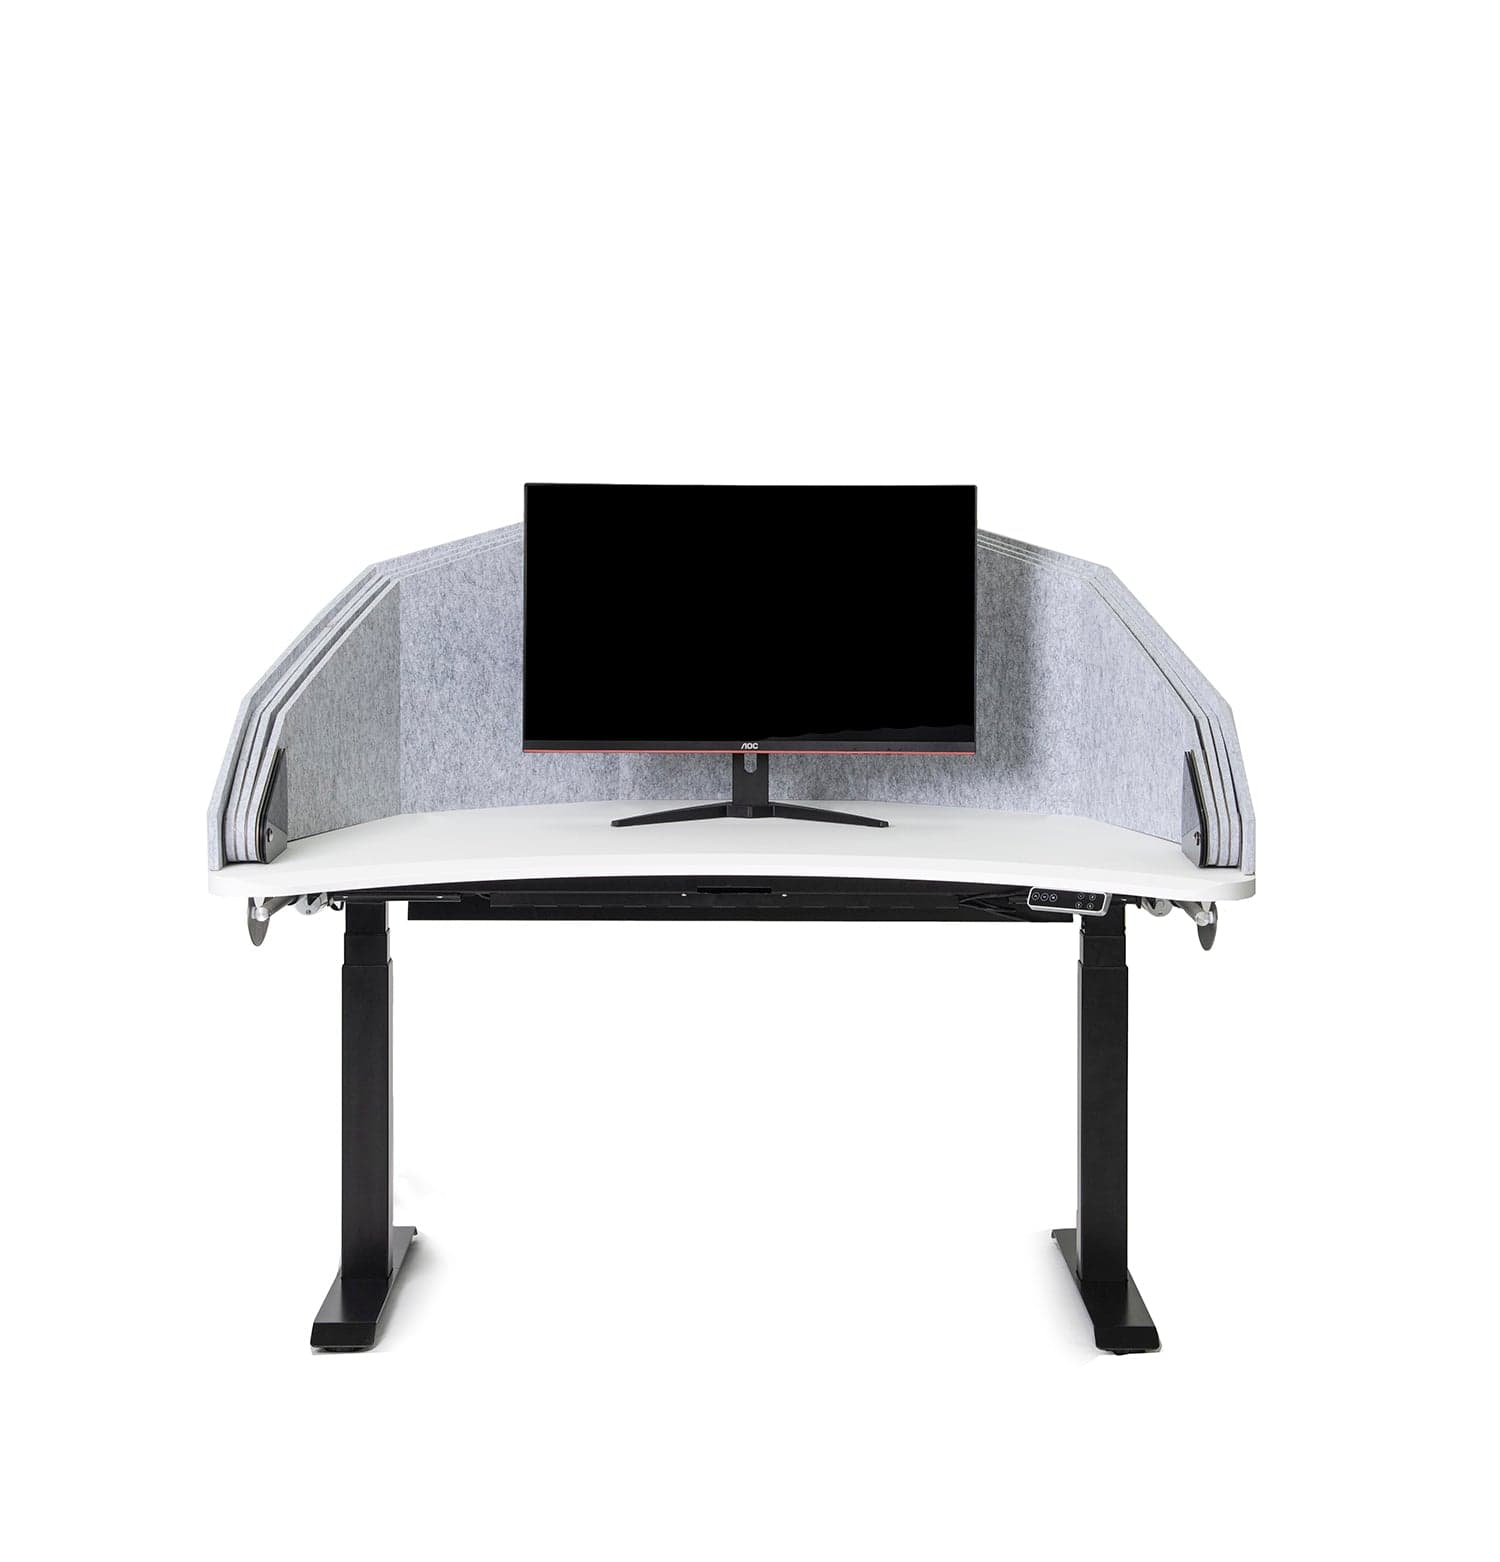 MojoDome - Standing Desk + Adjustable Acoustic Panels - MojoDesk